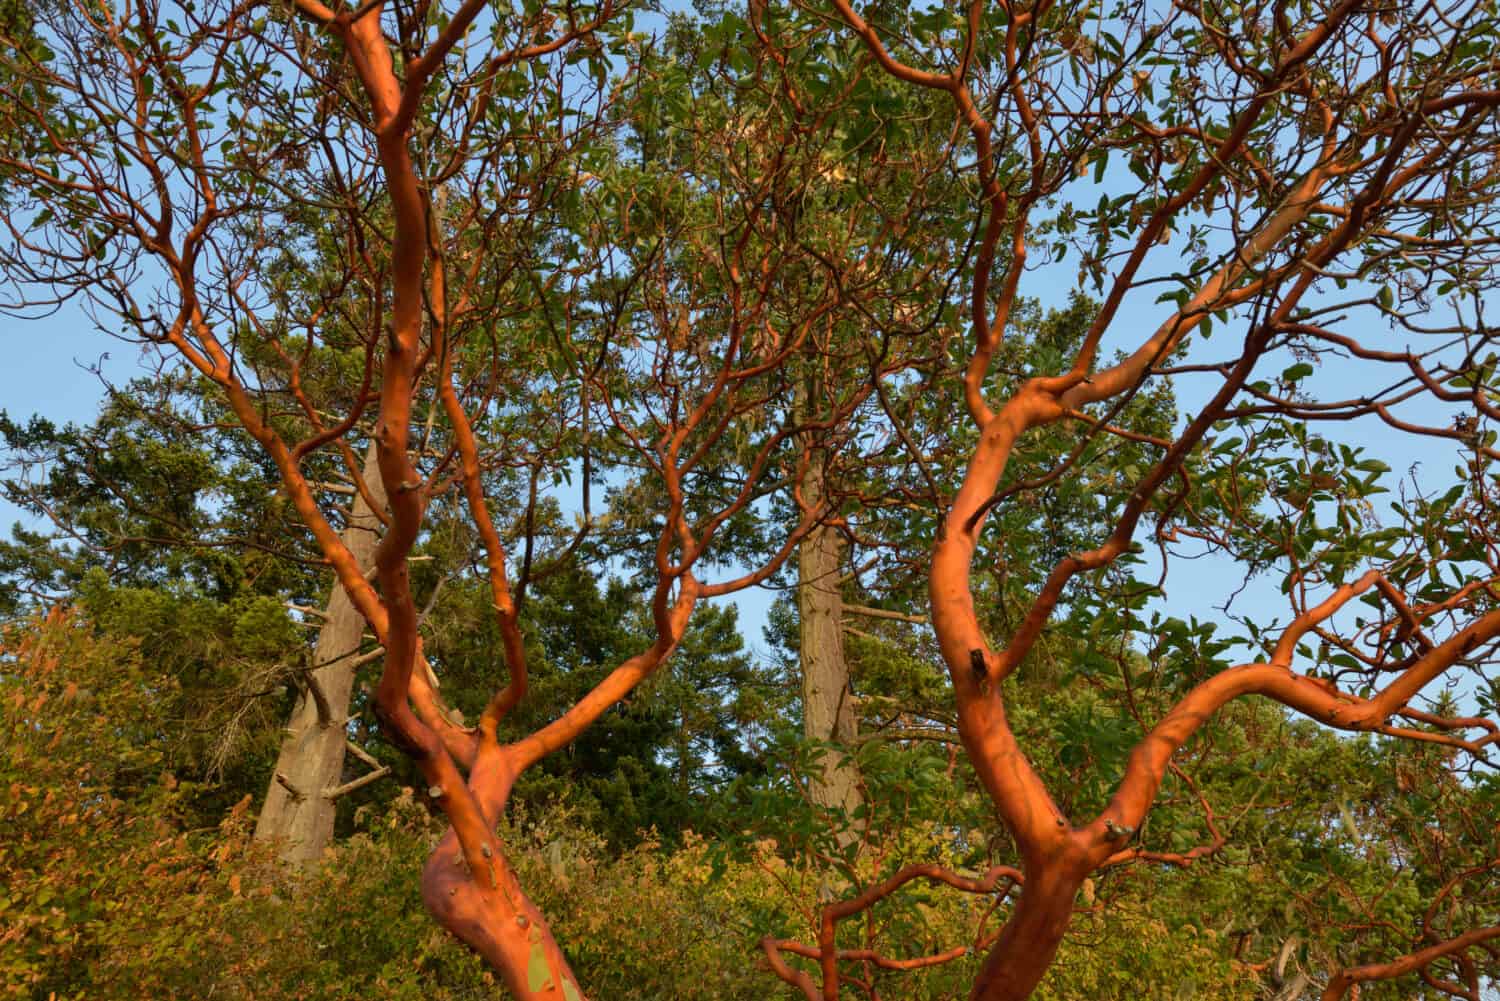 Arbutus tree (Arbutus menziesii), Russell Island, British Columbia, Canada